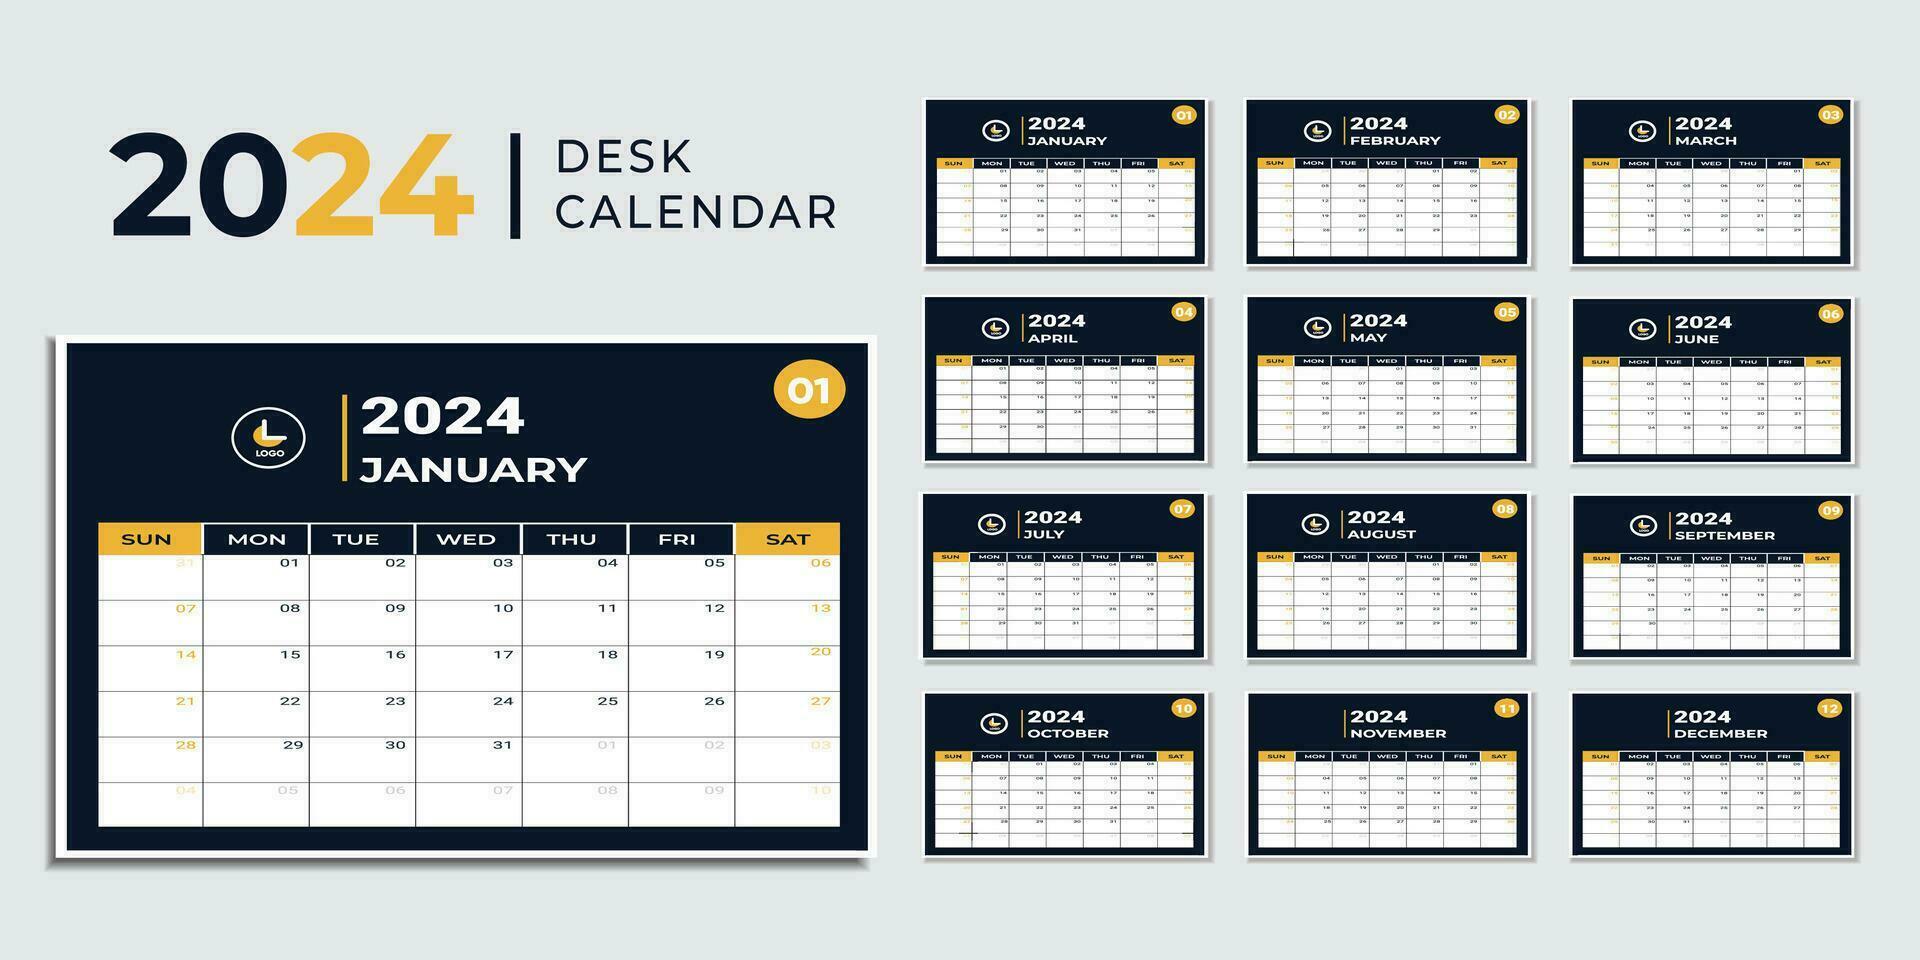 mensual calendario modelo para 2024 año. pared calendario en un minimalista estilo. calendario 2024 semana comienzo domingo corporativo diseño planificador modelo. vector